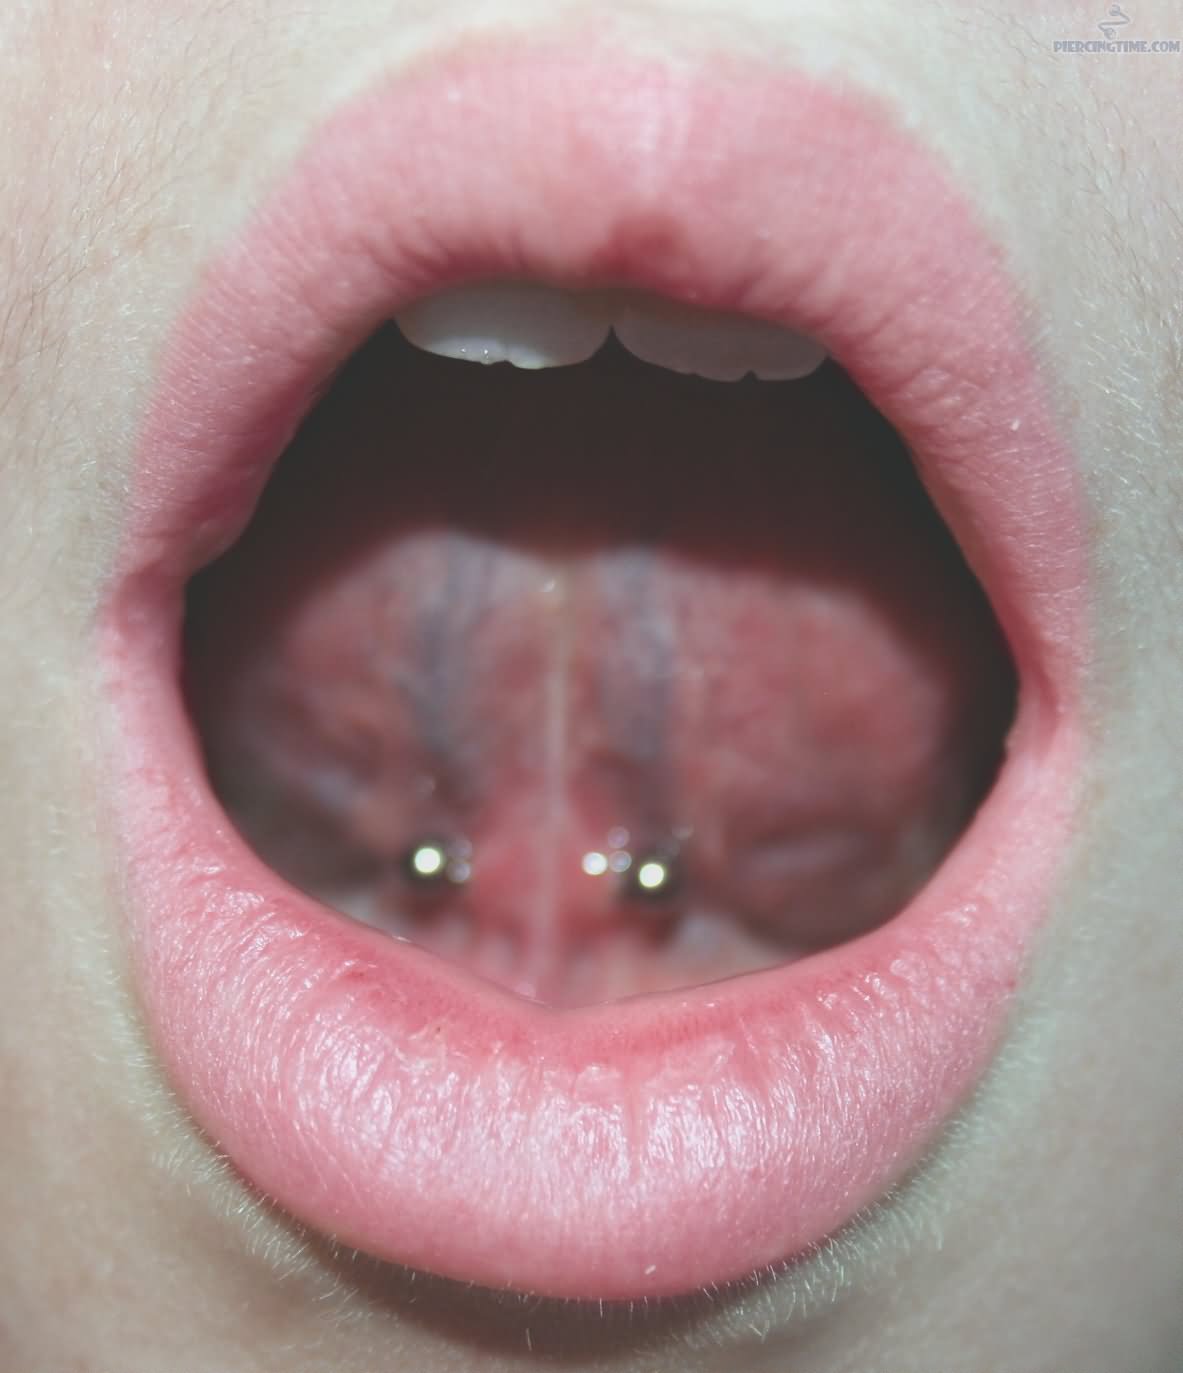 Small Silver Barbell Tongue Webbing Piercing